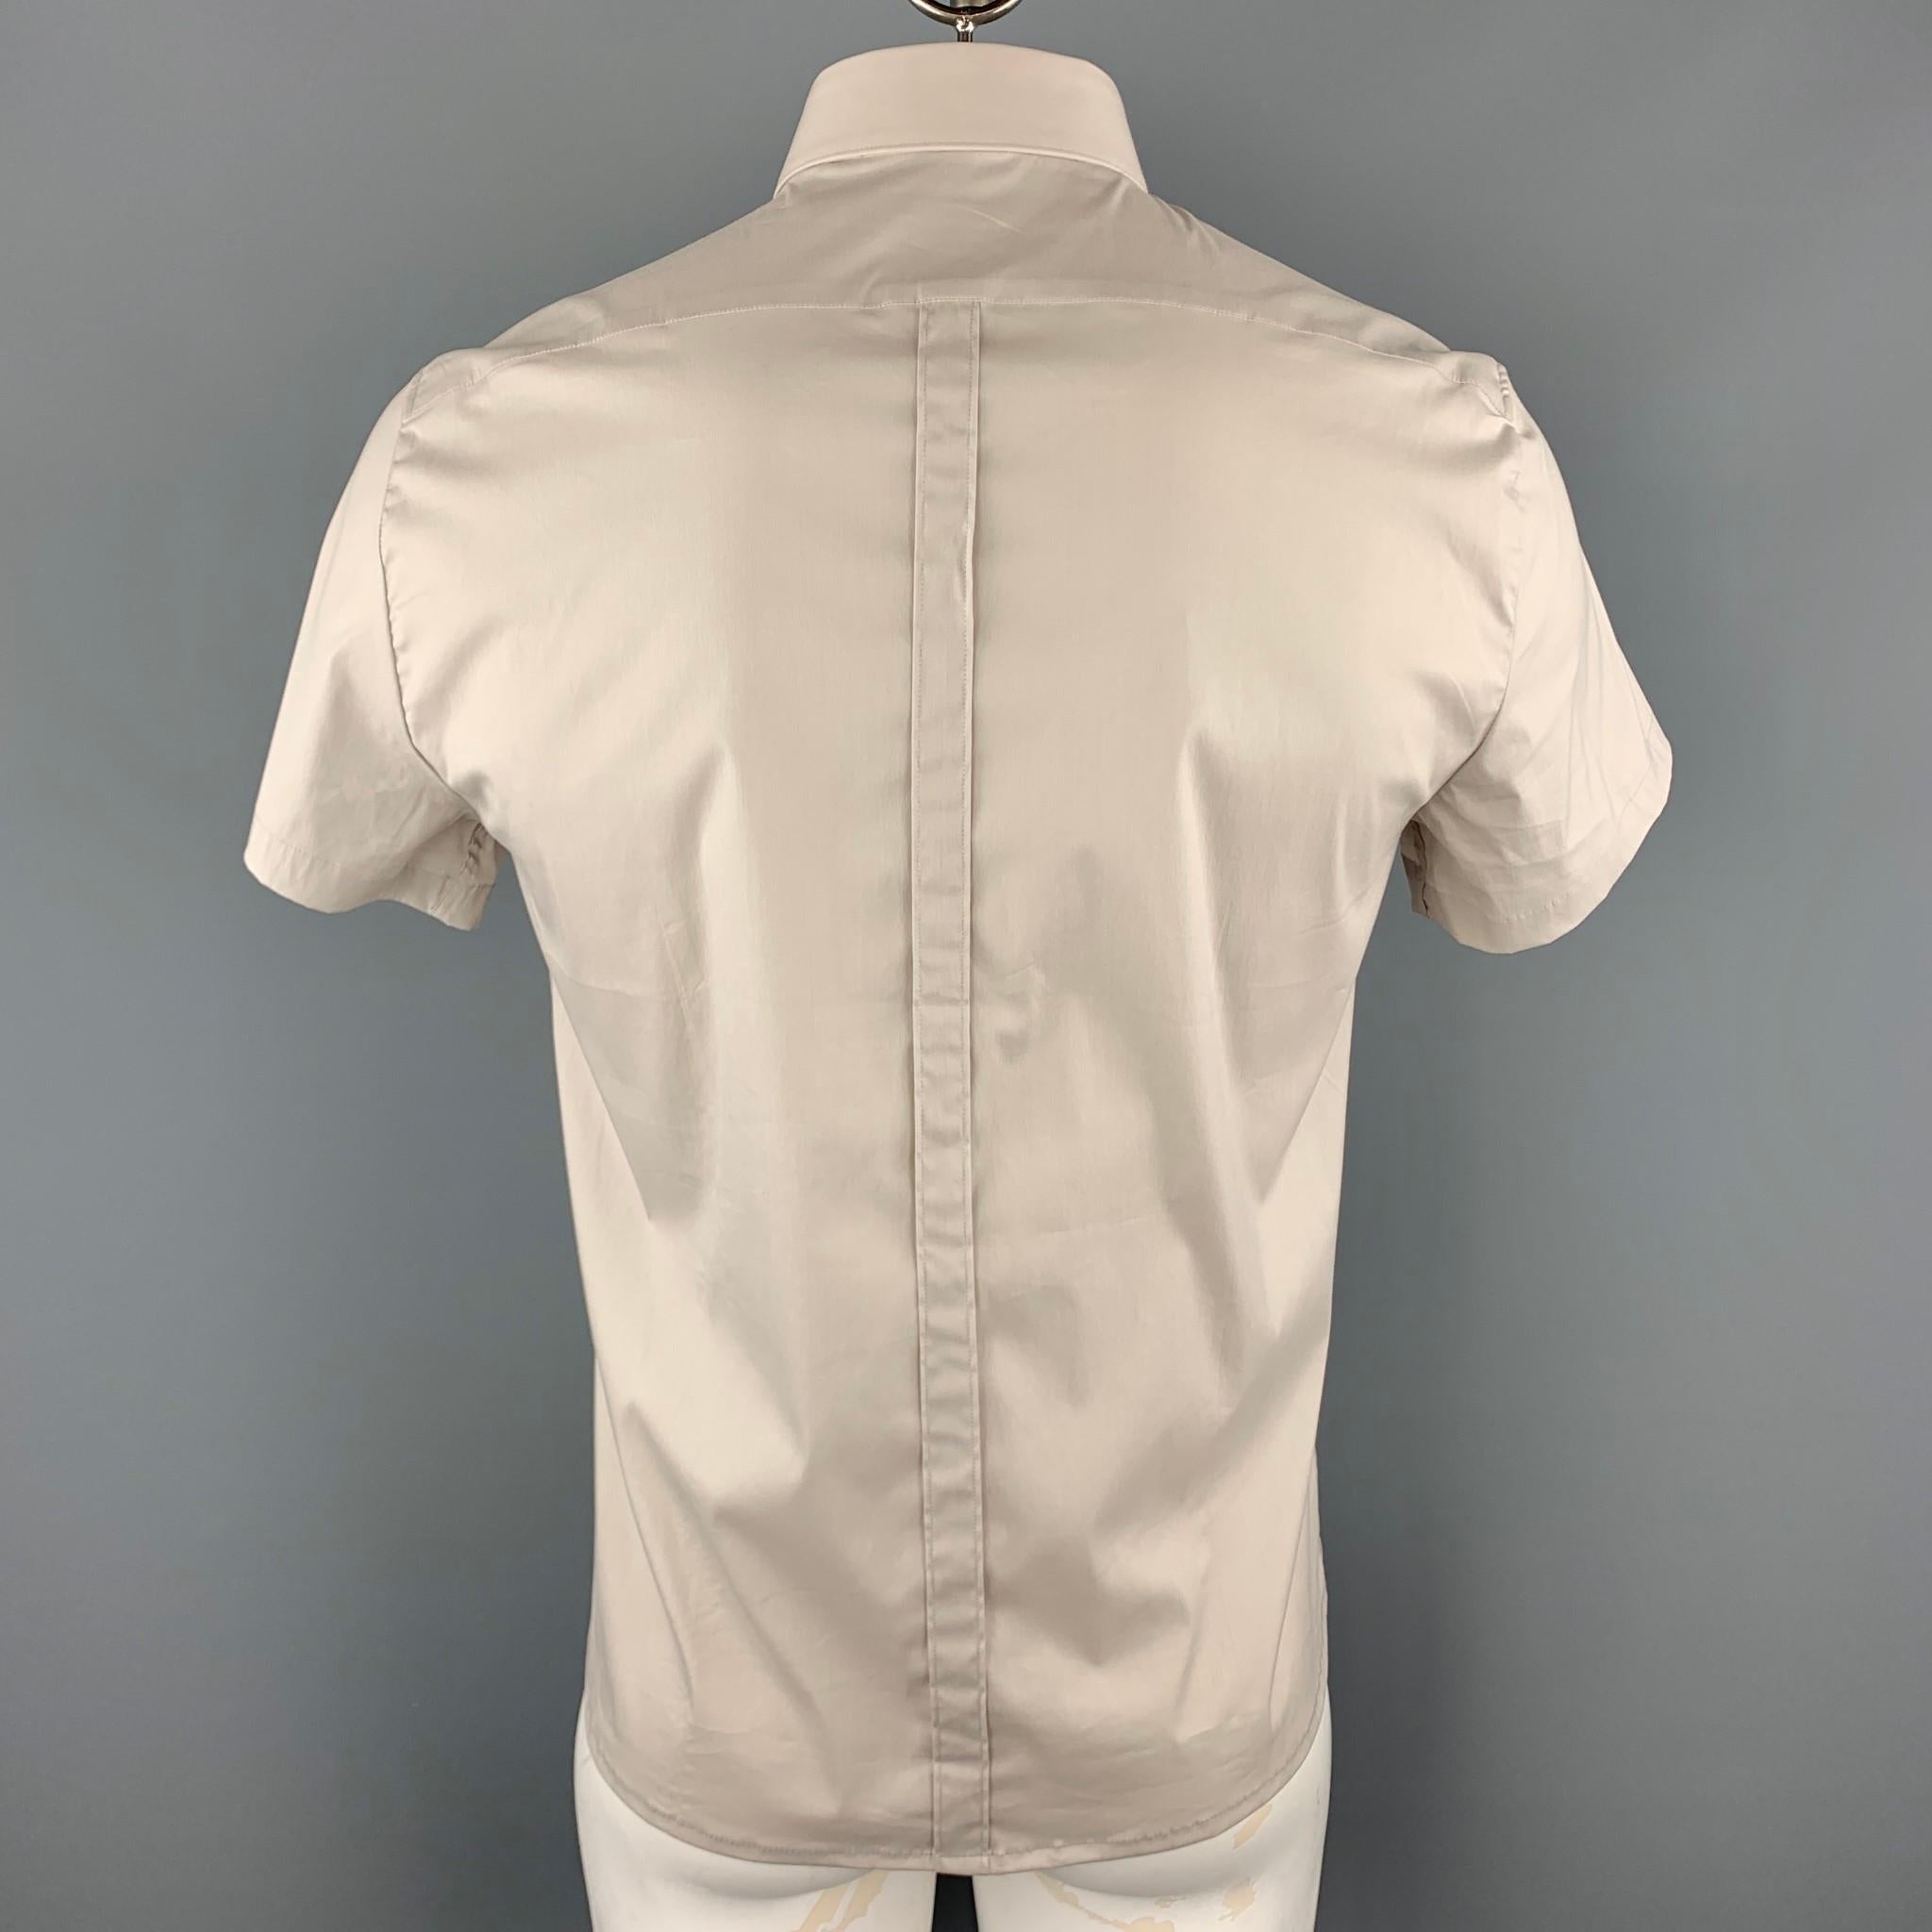 Beige PATRIZIA PEPE Size L Ivory Cotton Blend Button Up Short Sleeve Shirt